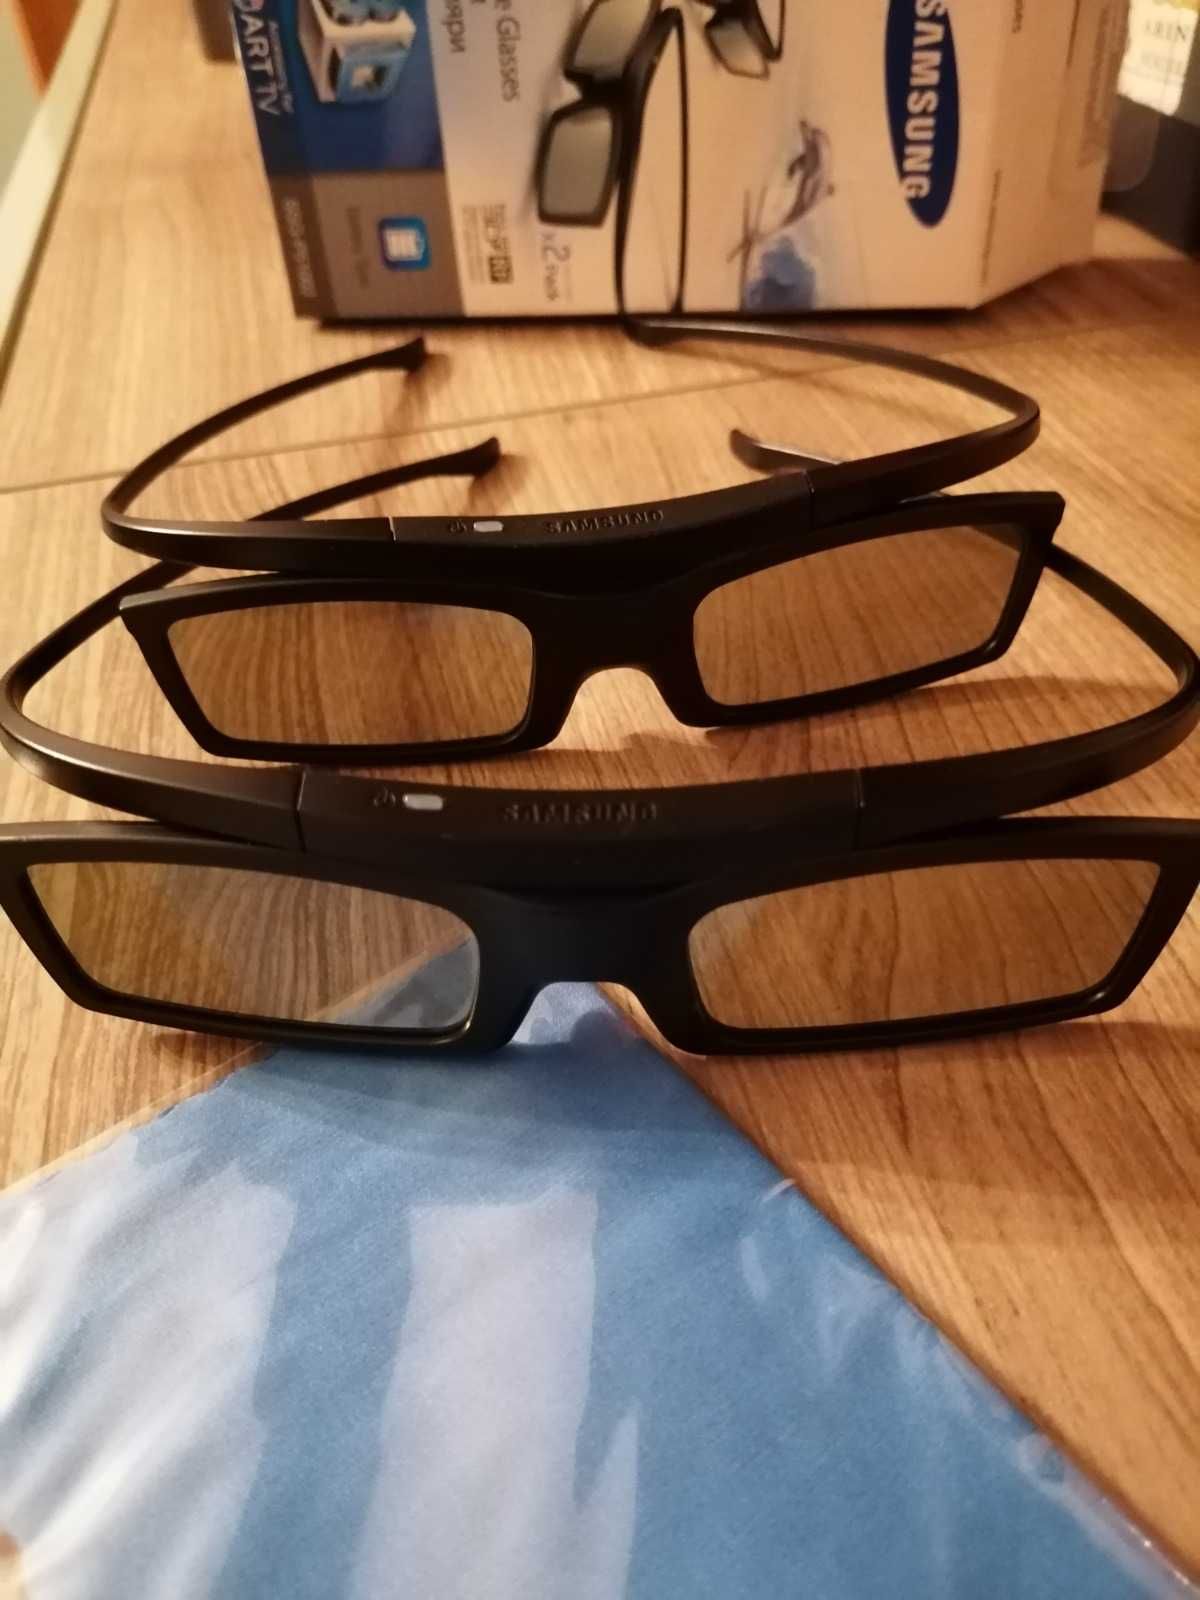 Óculos 3D Samsung